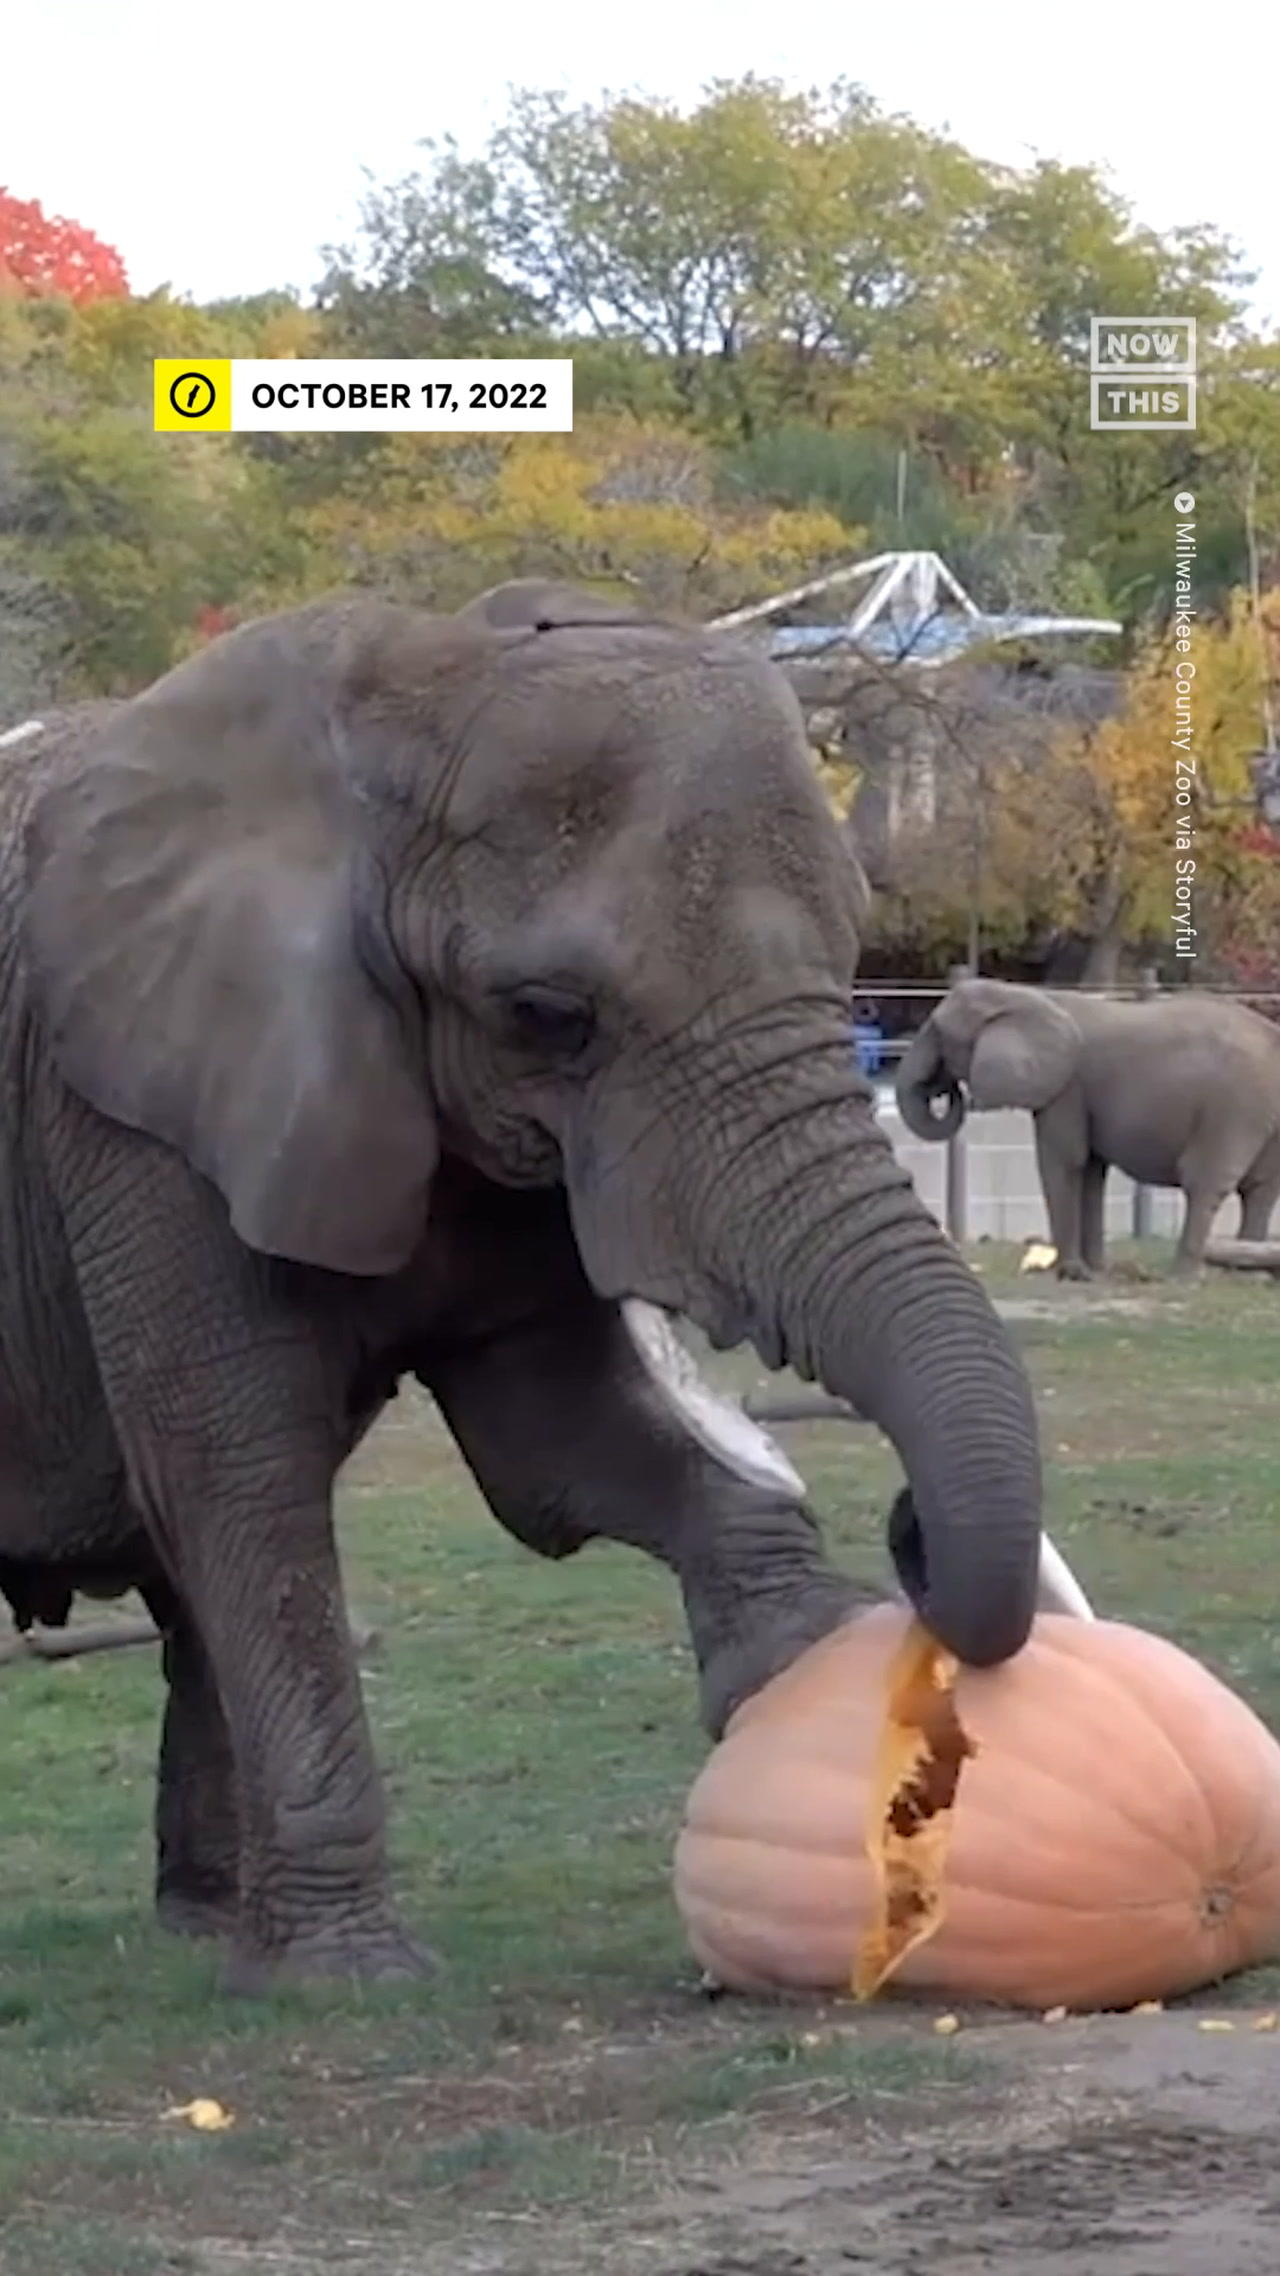 Milwaukee County Zoo Elephants Celebrate With Annual Pumpkin ‘Smash and Squash’